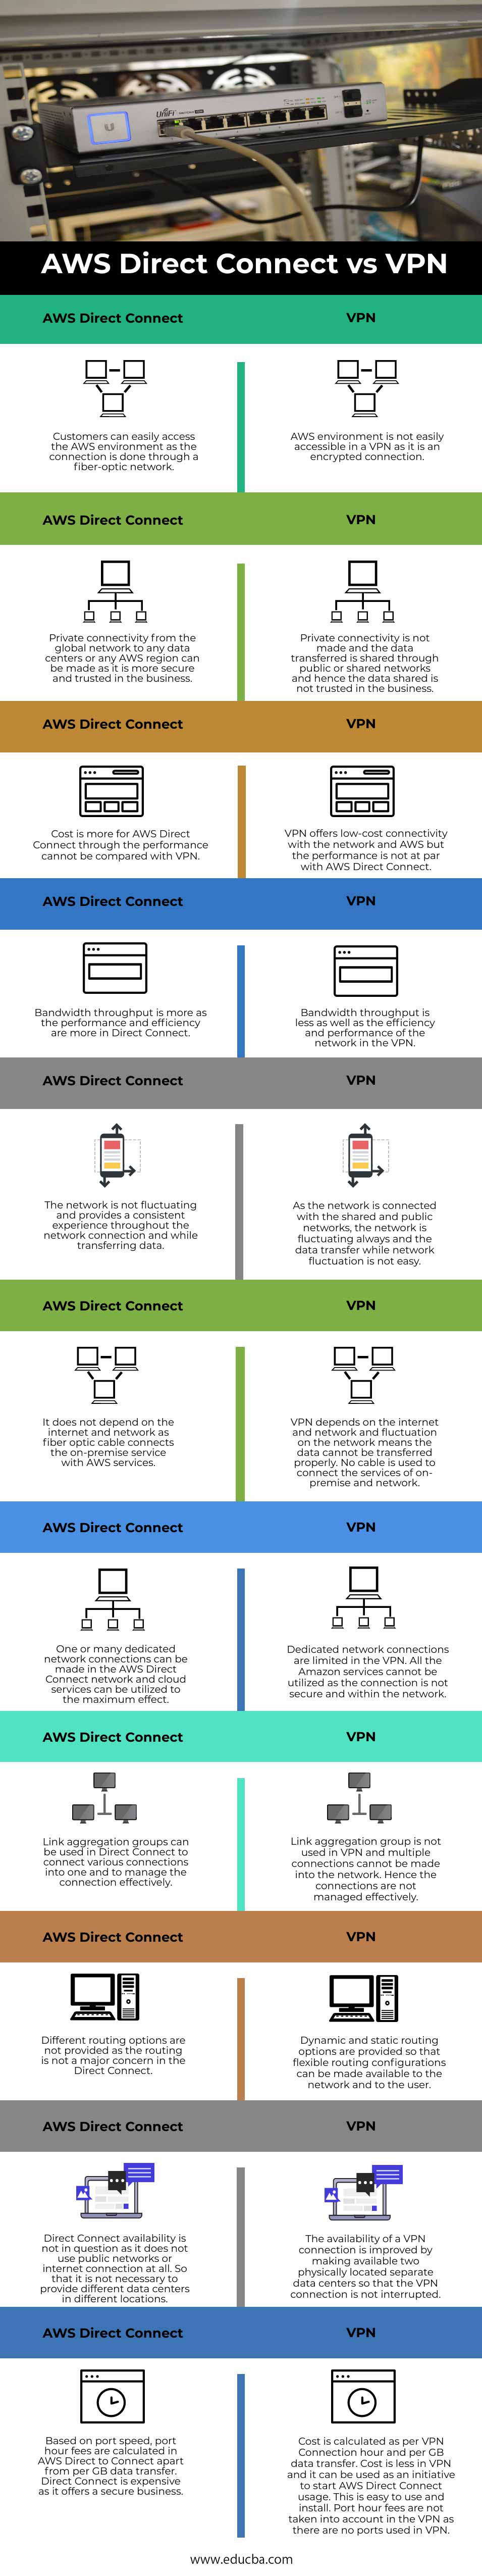 AWS-Direct-Connect-vs-VPN-info